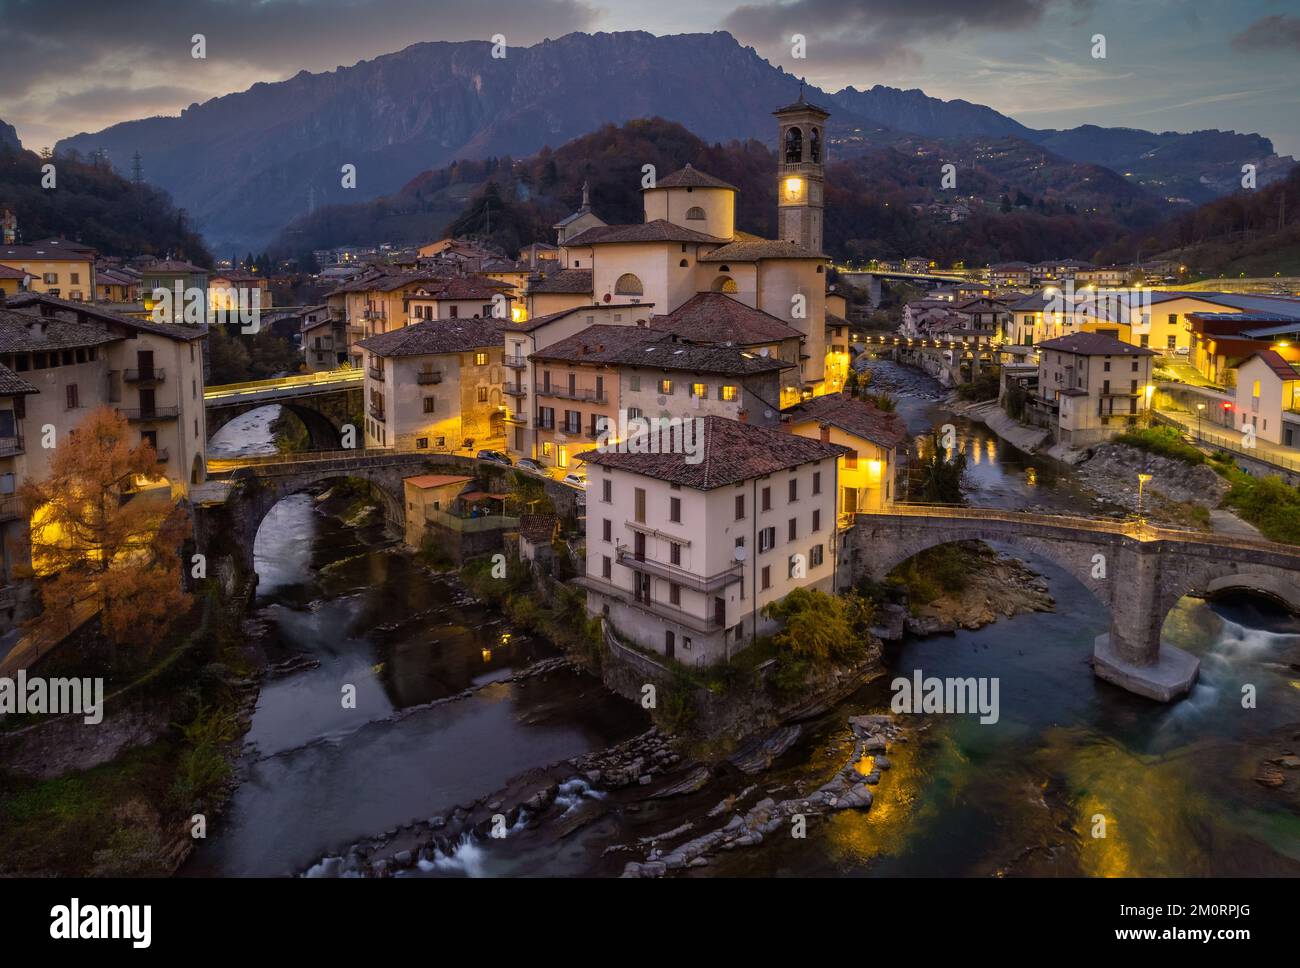 Aerial villagescape with mountain backdrop at night, San Giovanni Bianco, Val Brembana, Bergamo, Lombardy, Italy Stock Photo